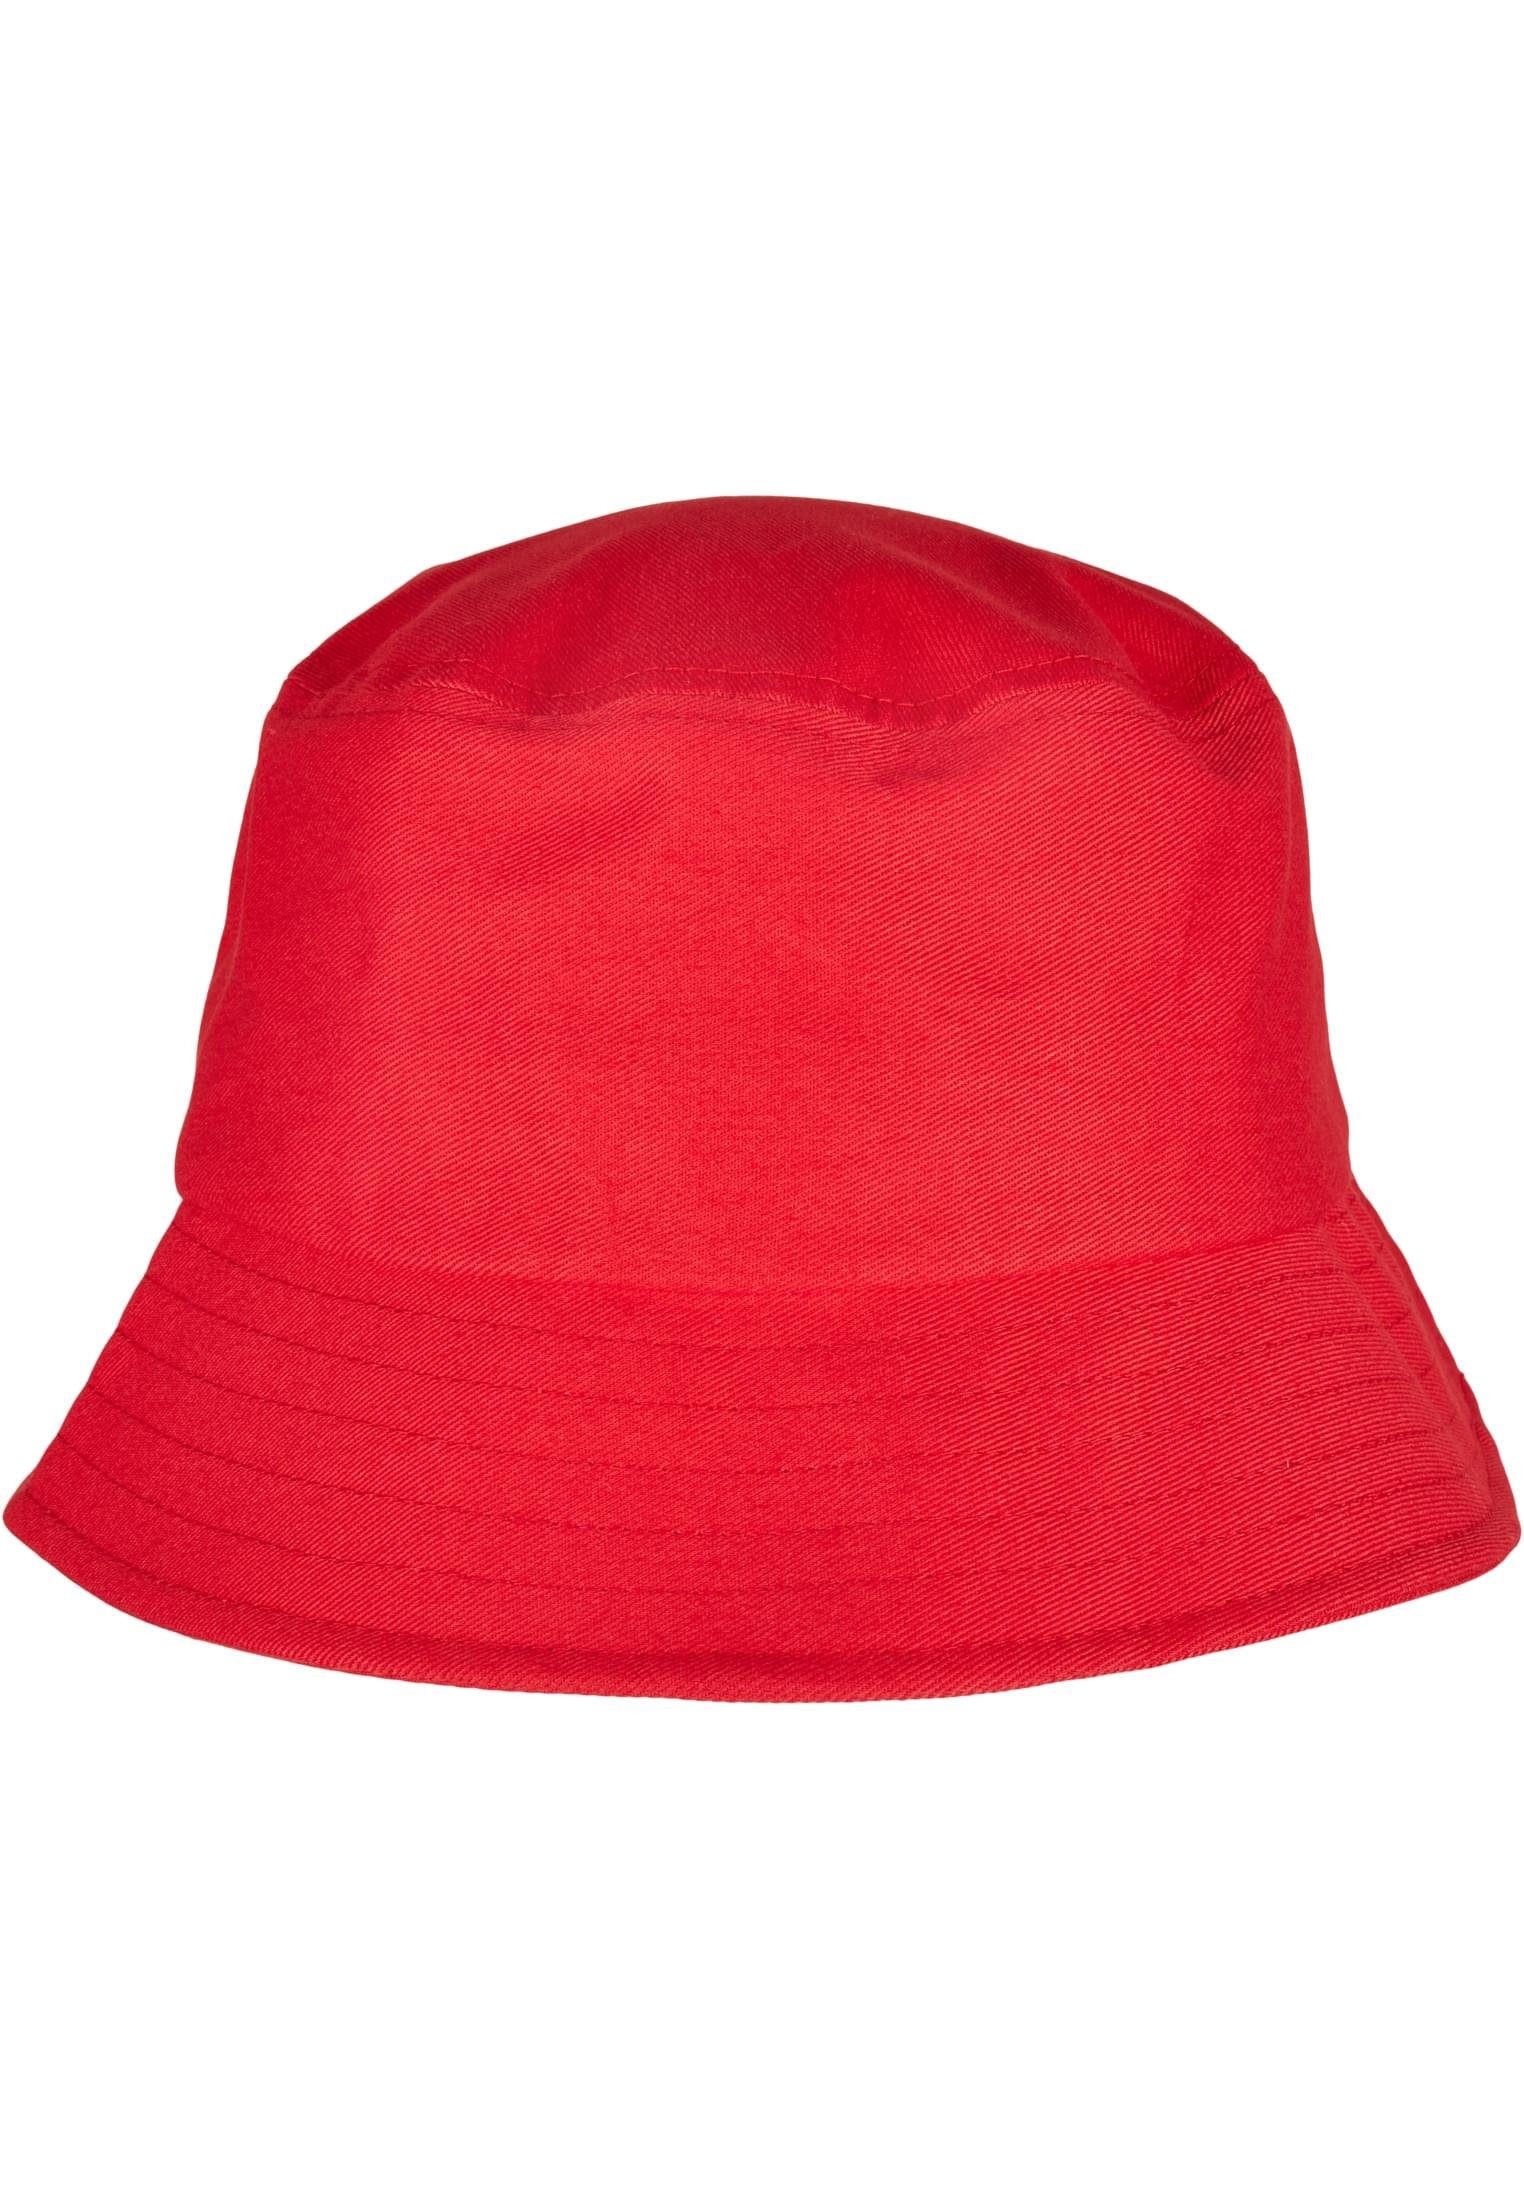 Accessoires Black Starter Bucket Basic Flex Cap Label cityred Hat